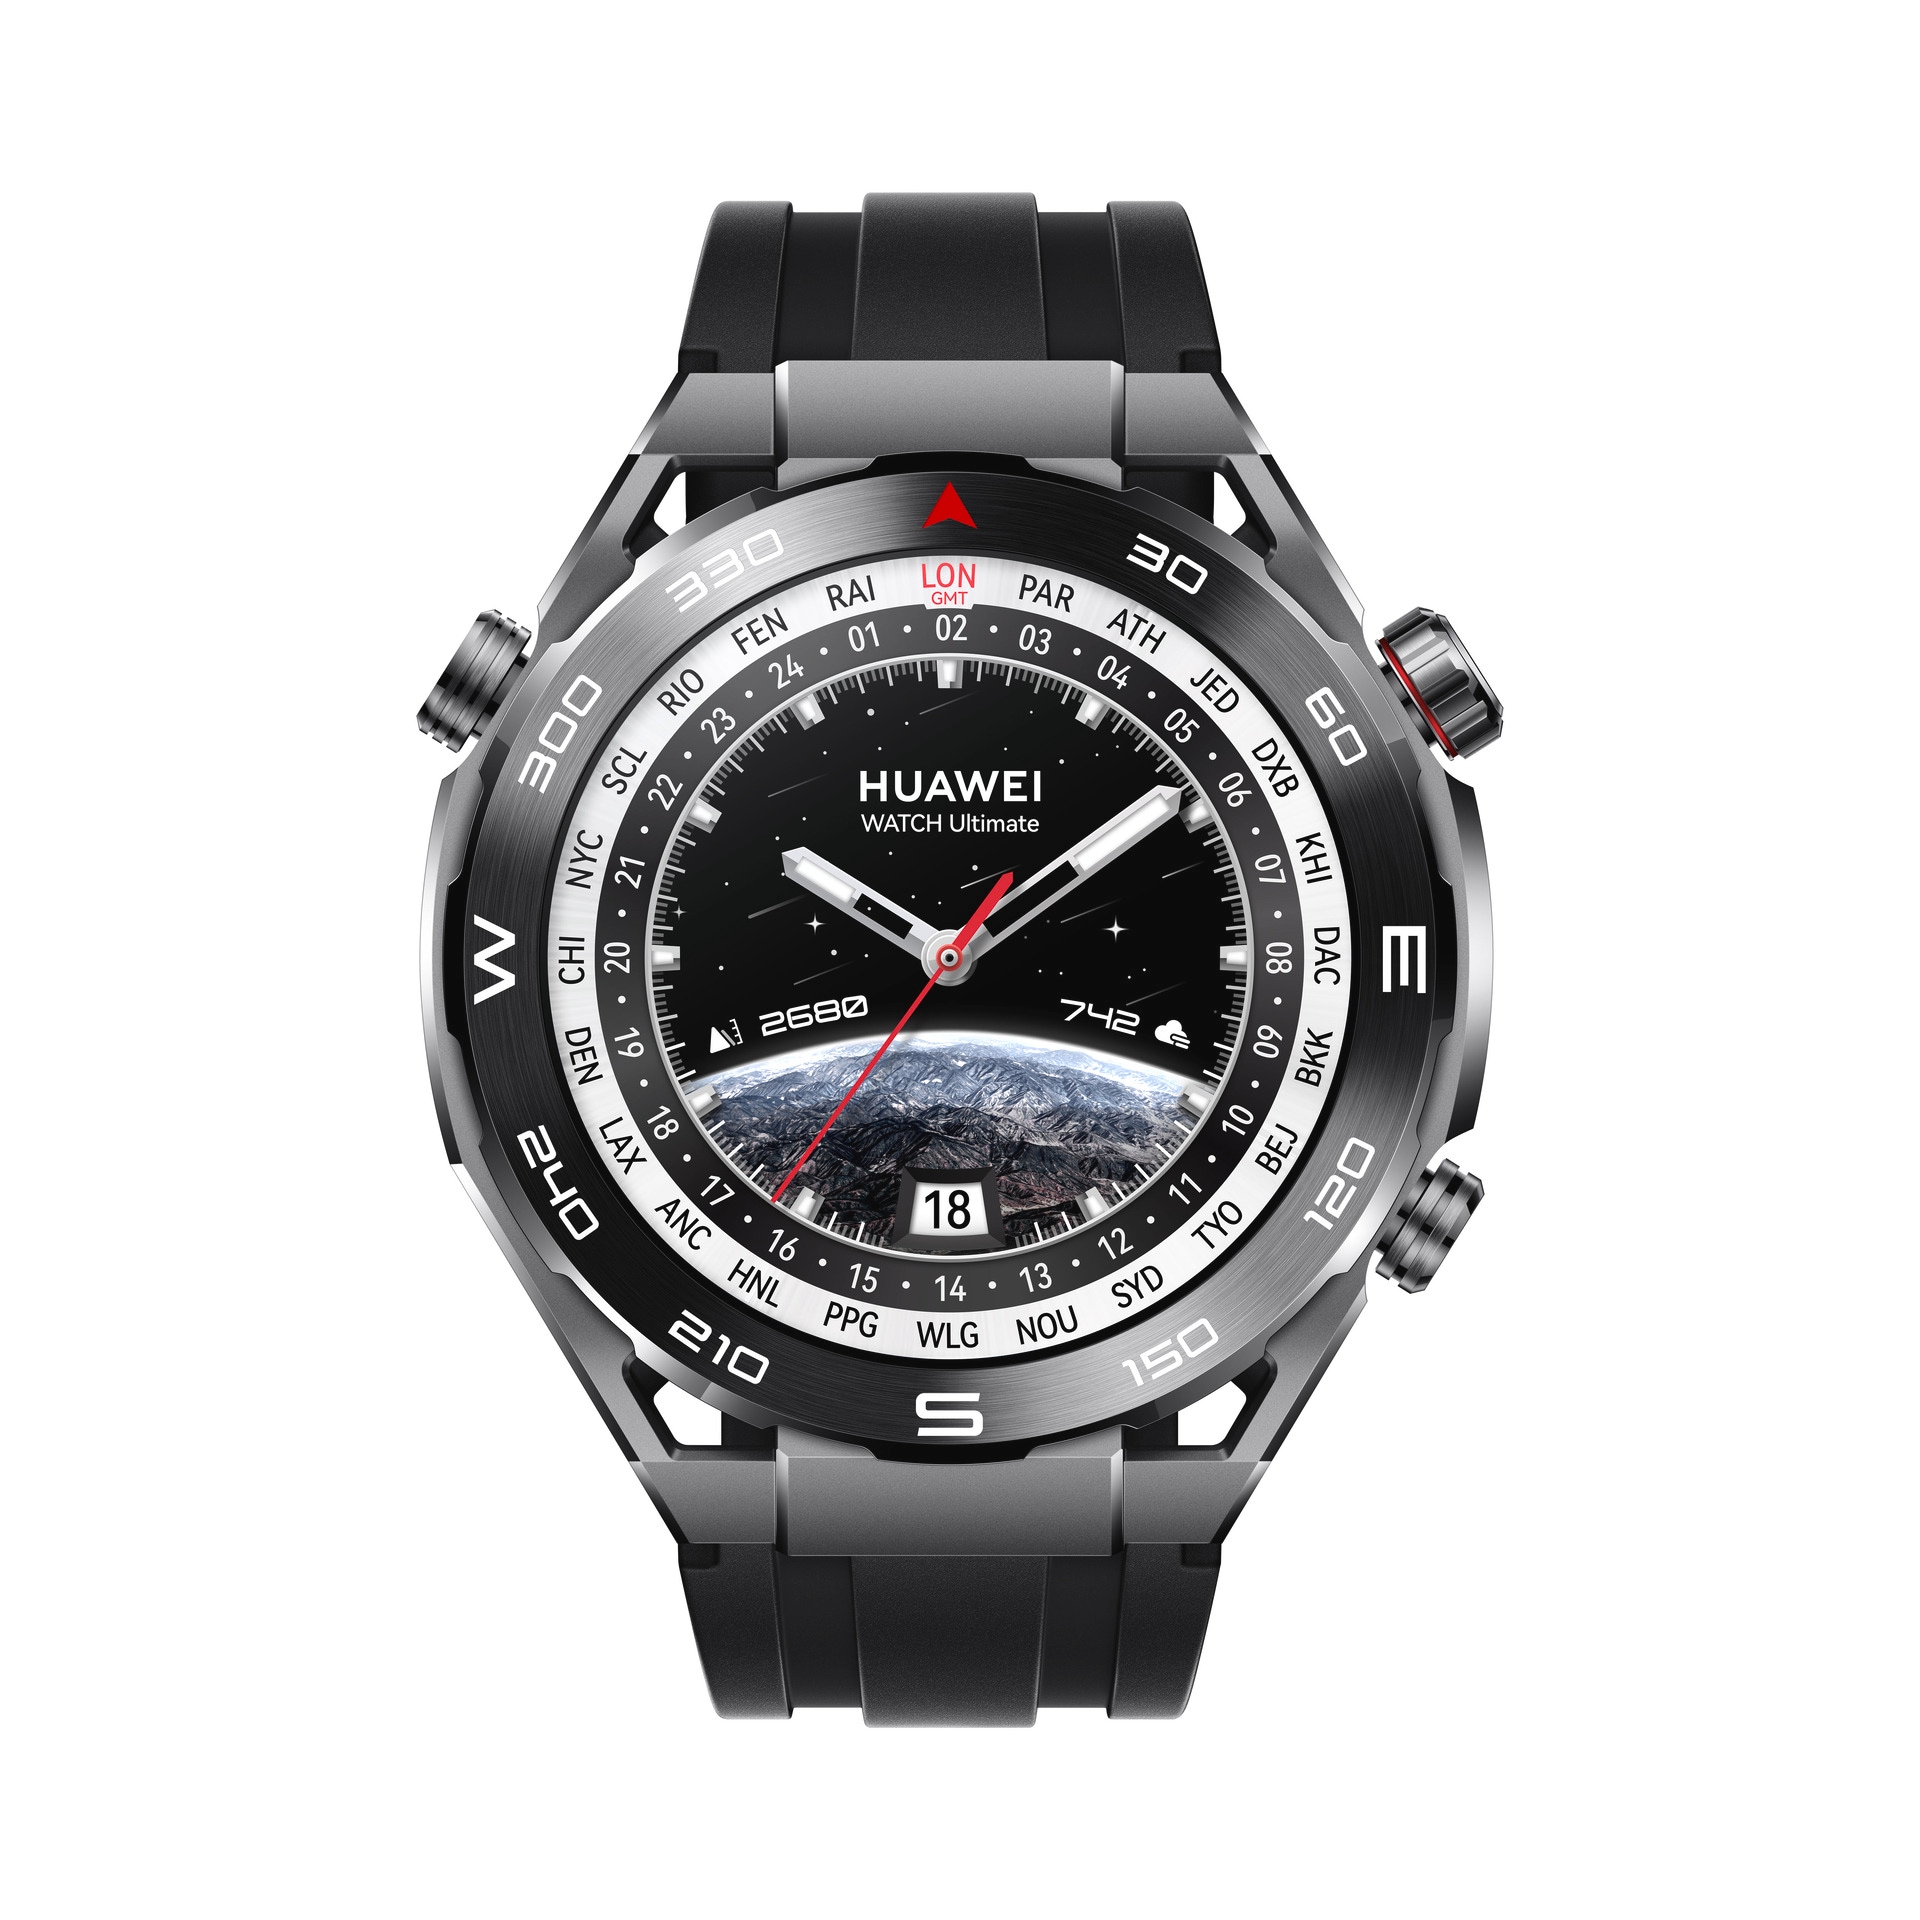 Huawei »Watch Smartwatch | Ultimate«, UNIVERSAL (Proprietär) kaufen